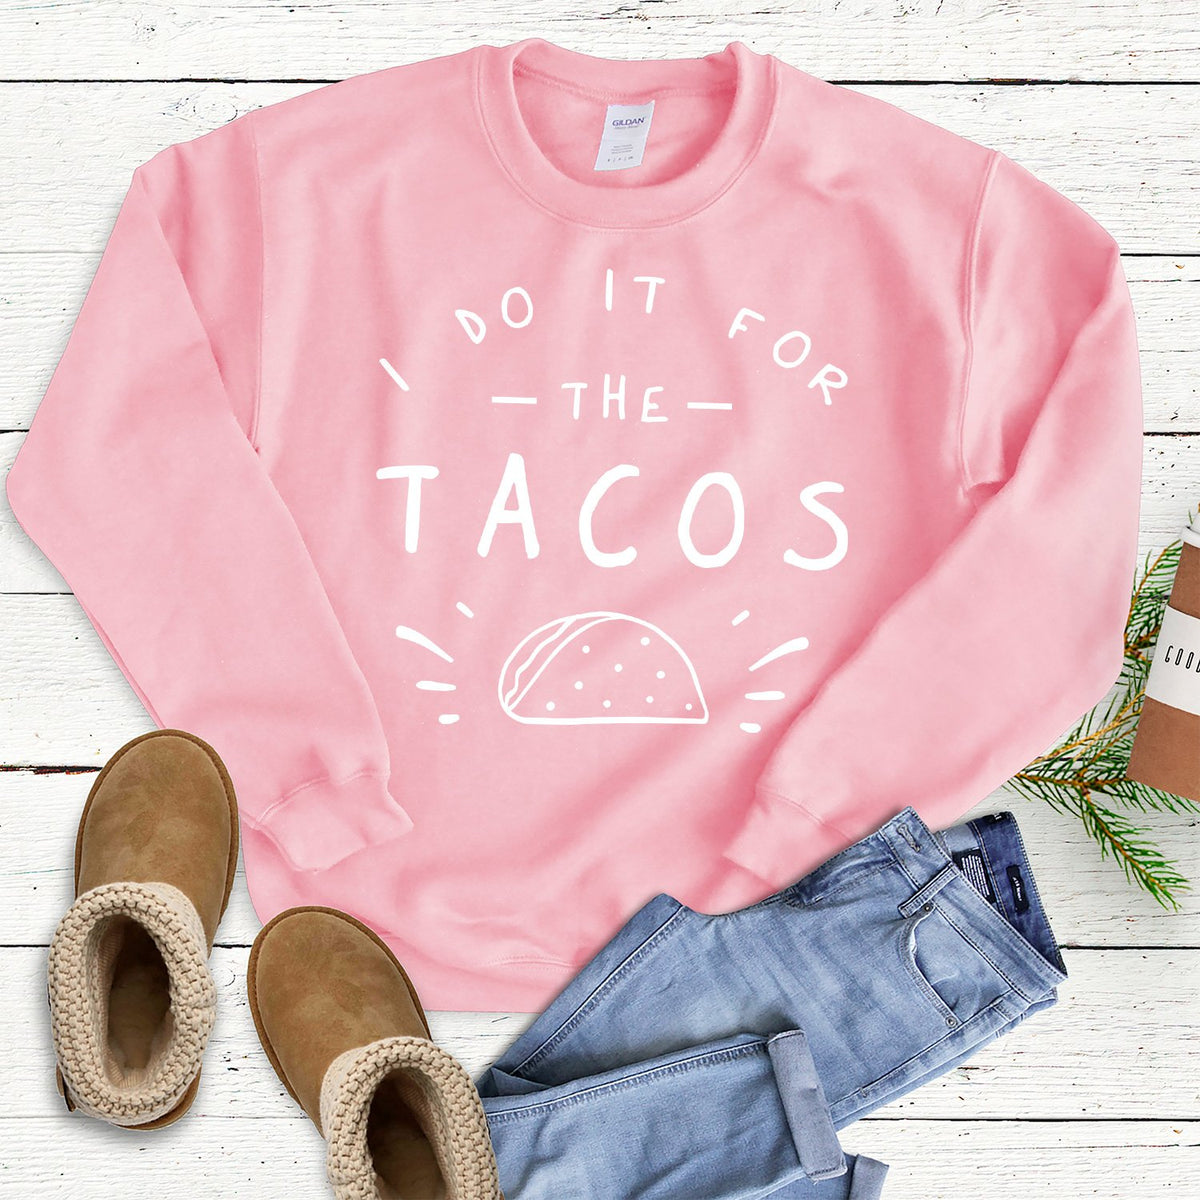 I Do It For The Tacos - Long Sleeve Heavy Crewneck Sweatshirt